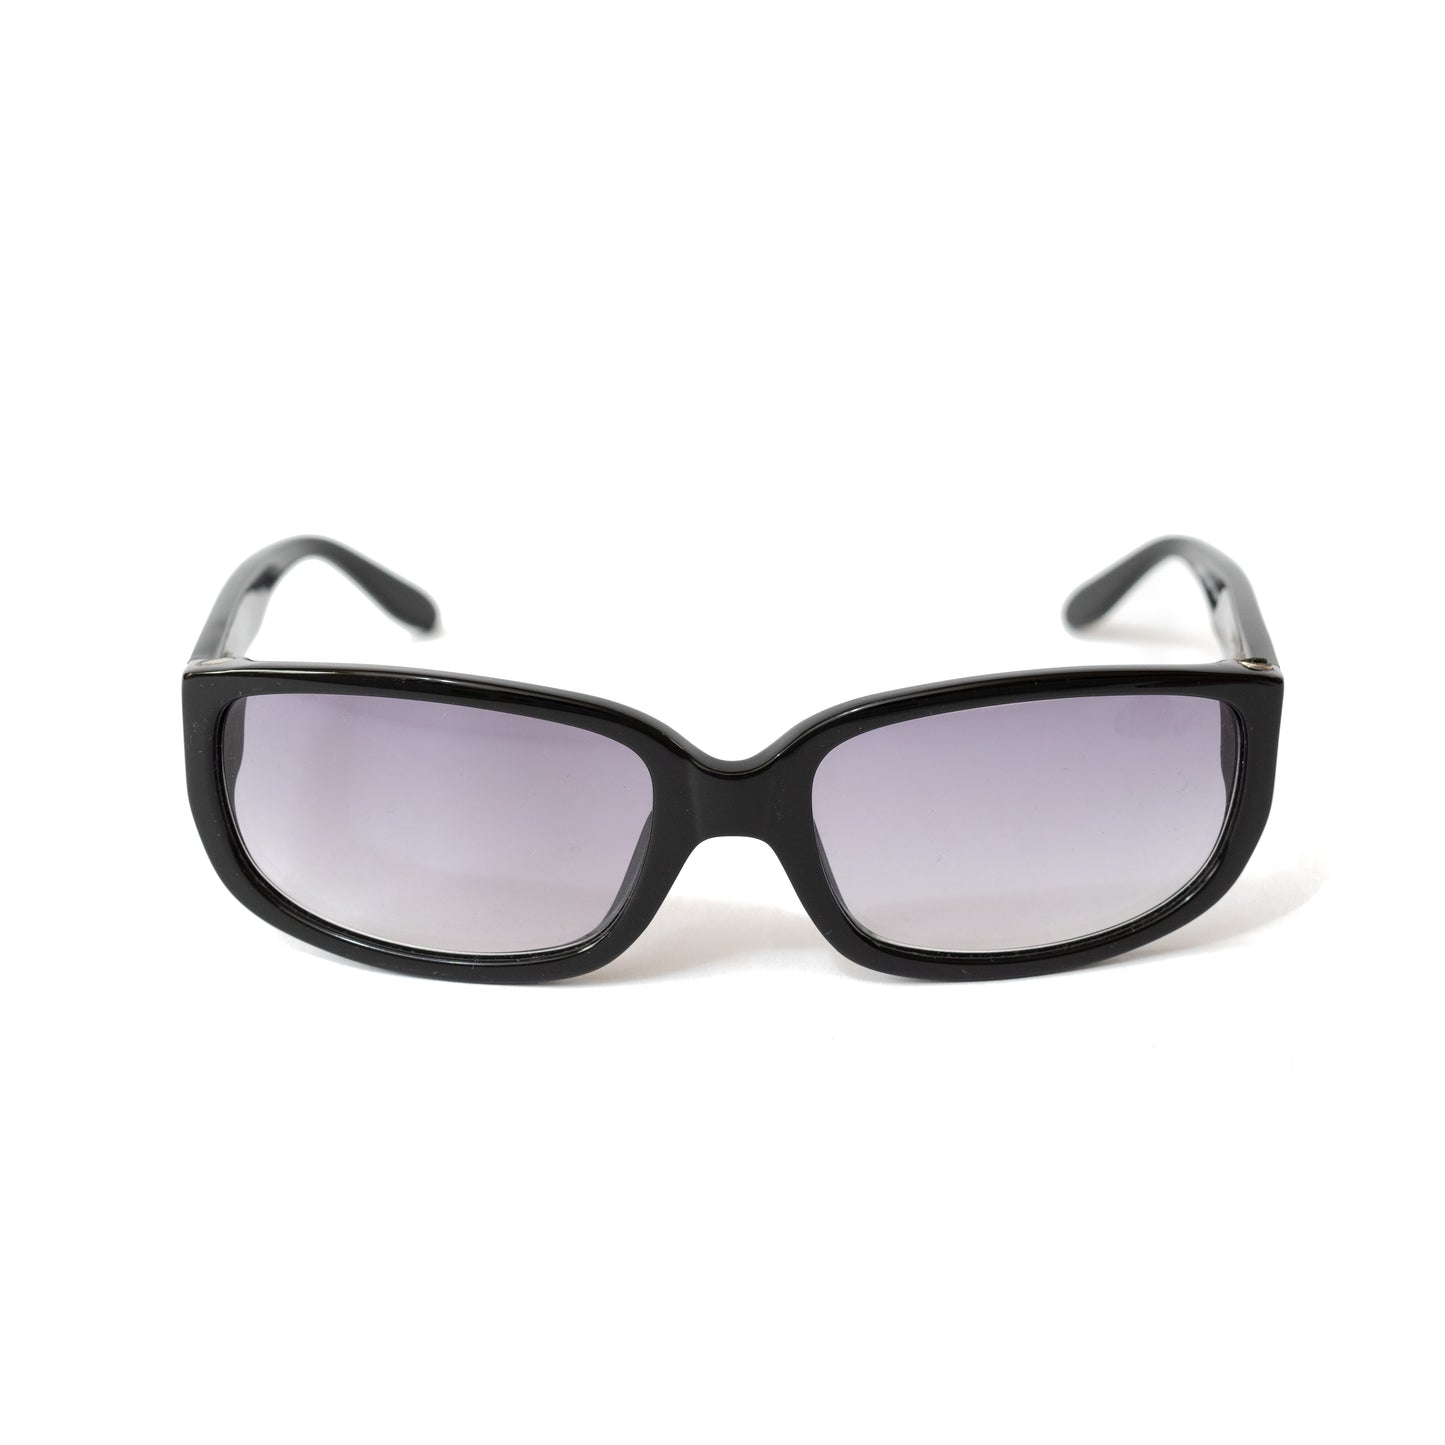 Yohji Yamamoto x Linda Farrow Prototype 2-Way Sunglasses (2009)